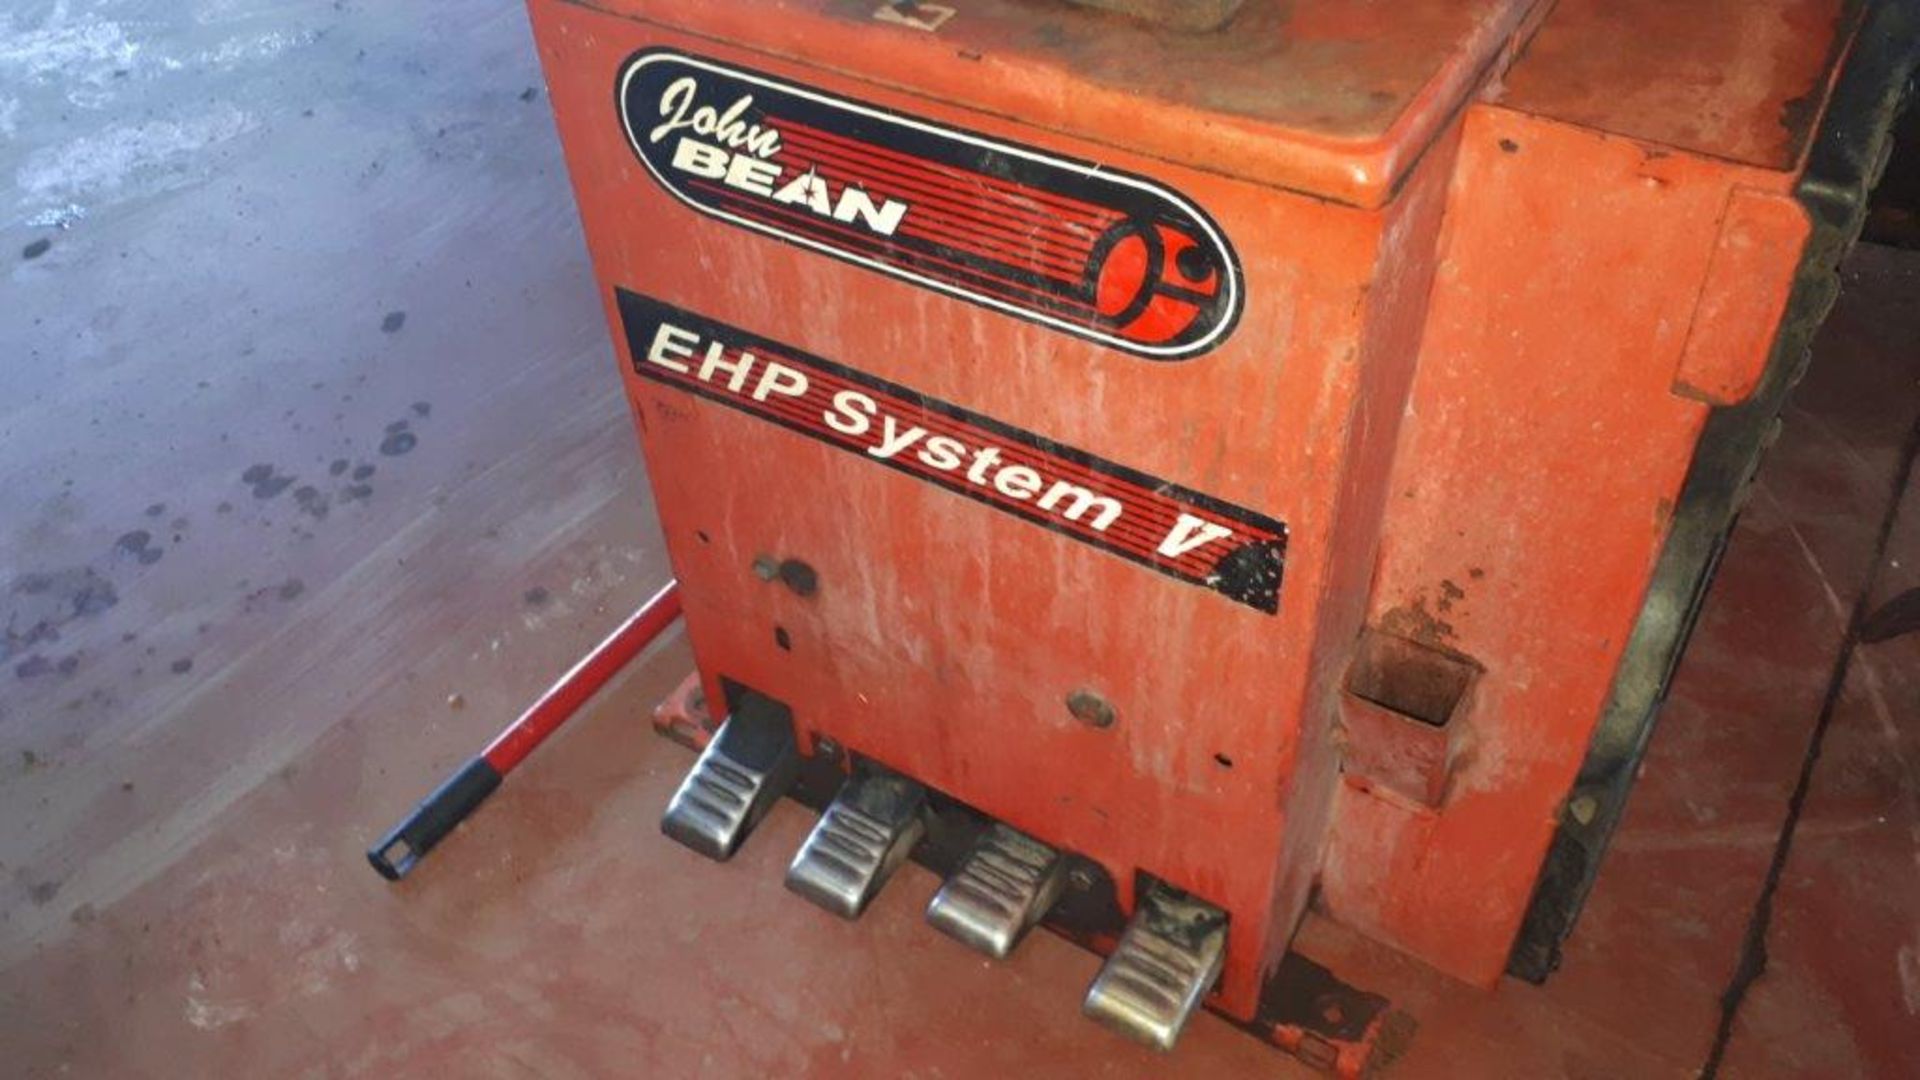 Changeur de pneu JOHN BEAM Mod. EHP SYSTEM V - Image 3 of 5